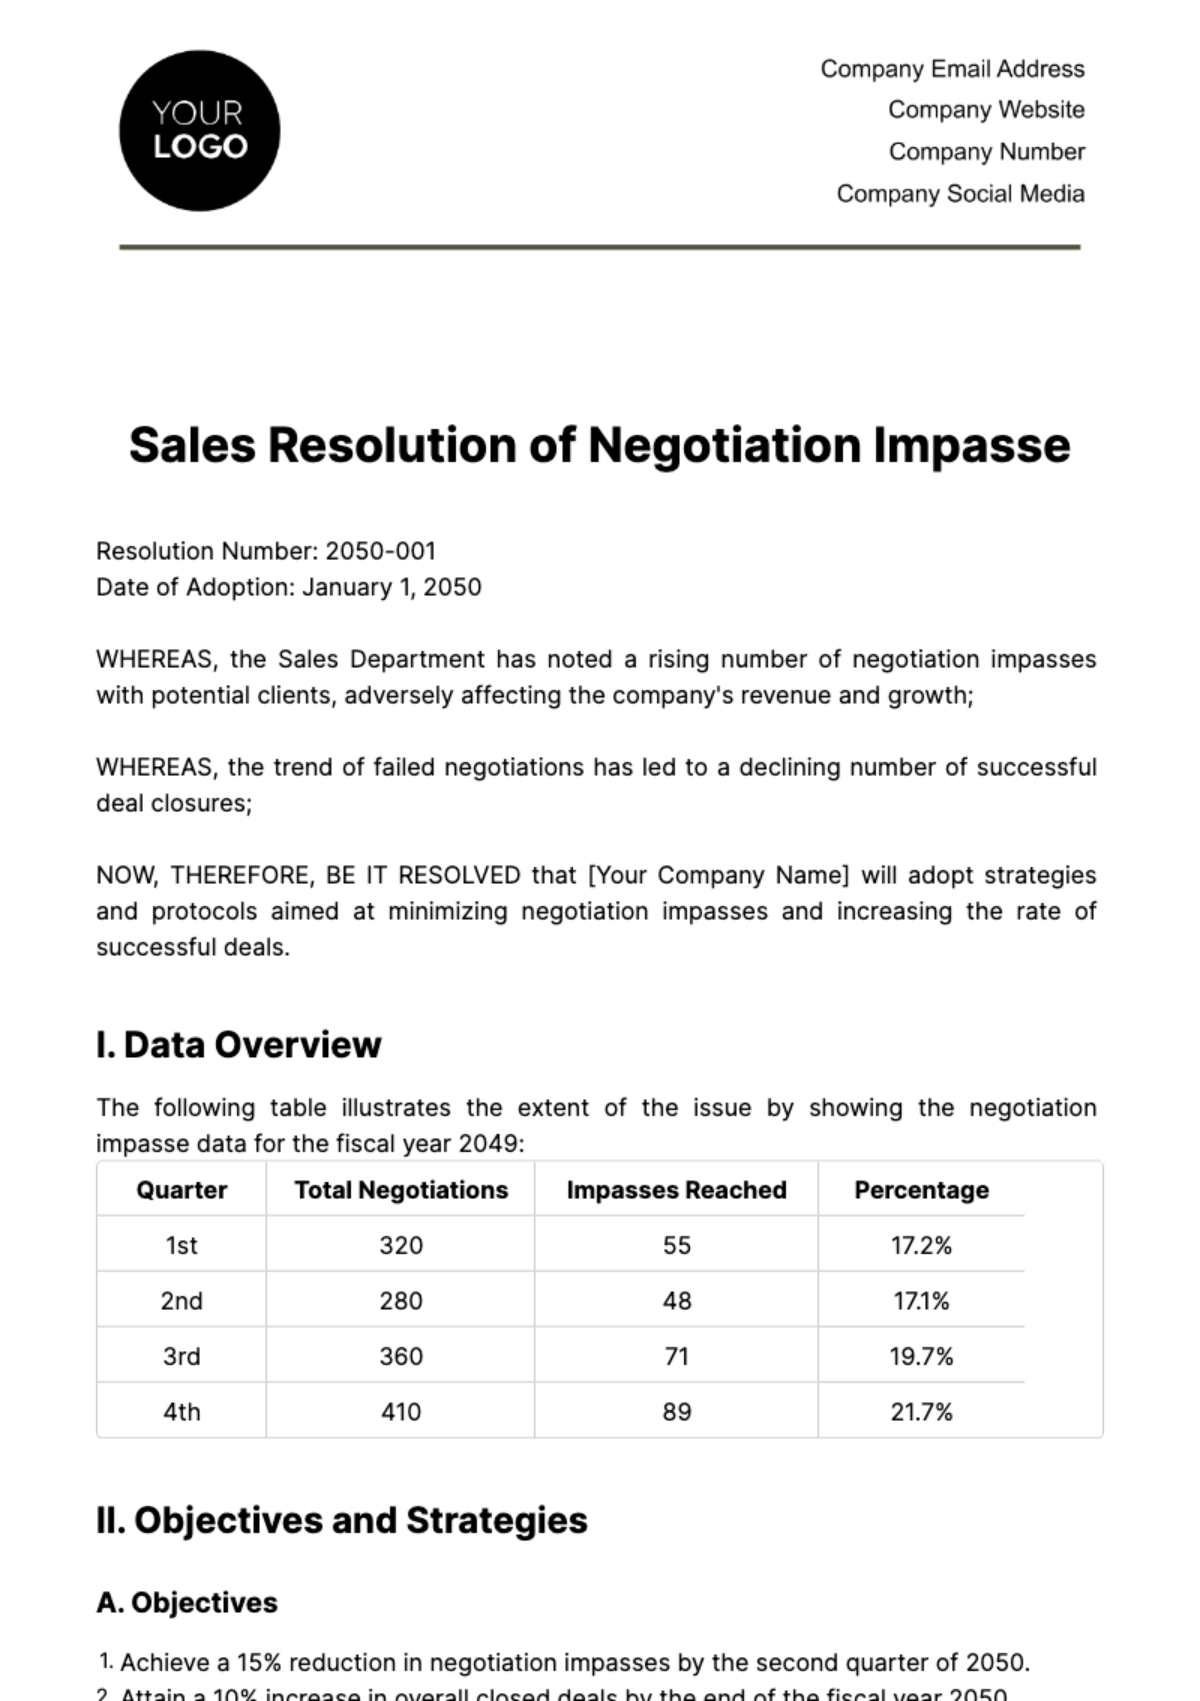 Free Sales Resolution of Negotiation Impasse Template